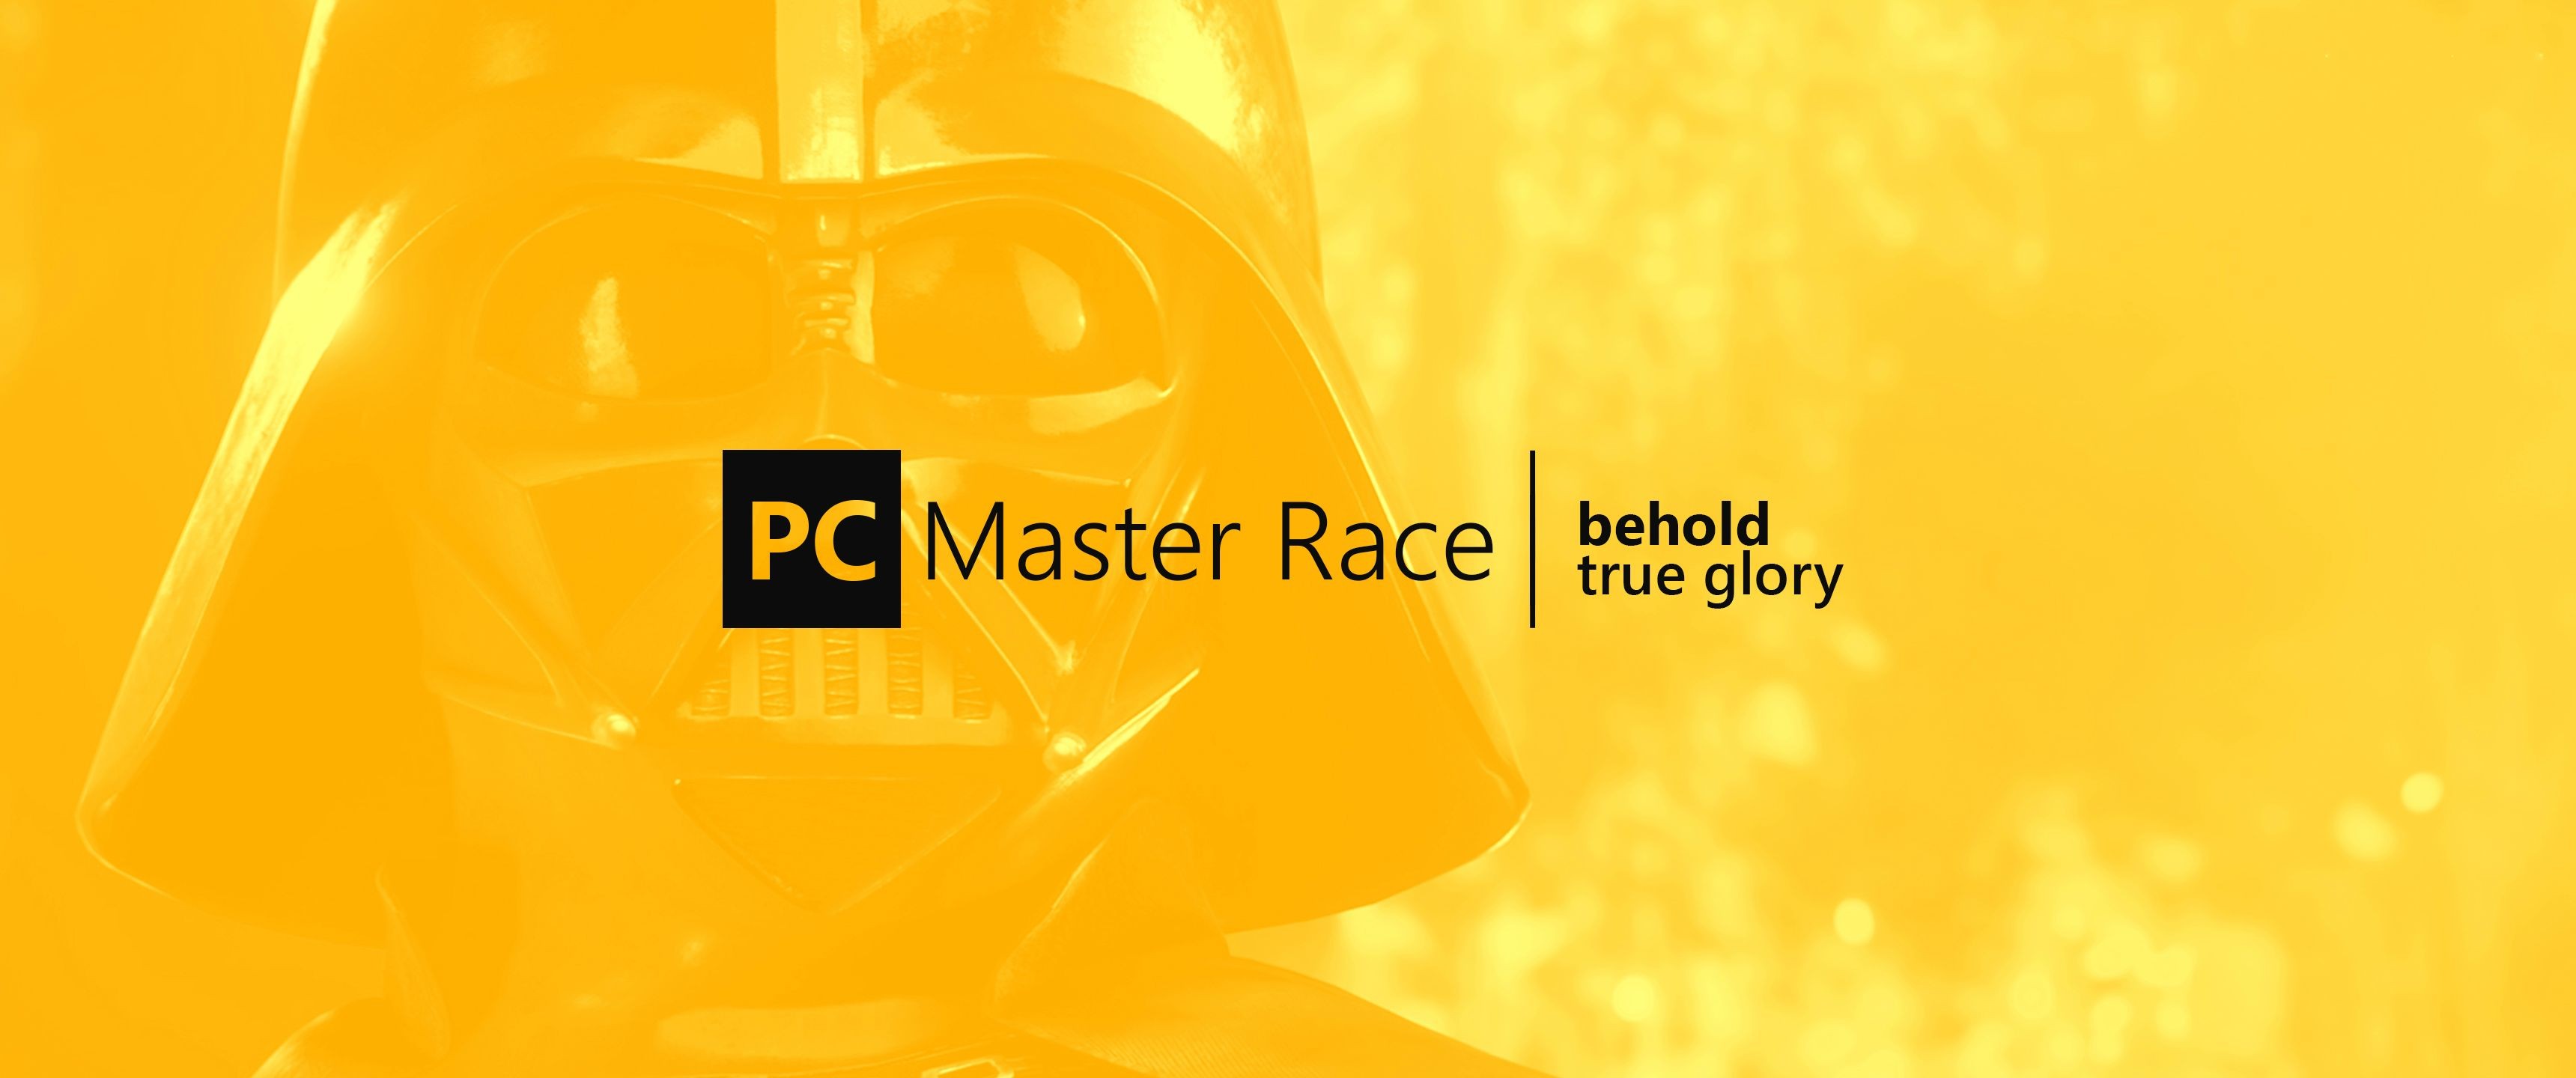 PC Master Race PC Gaming Darth Vader 3440x1440